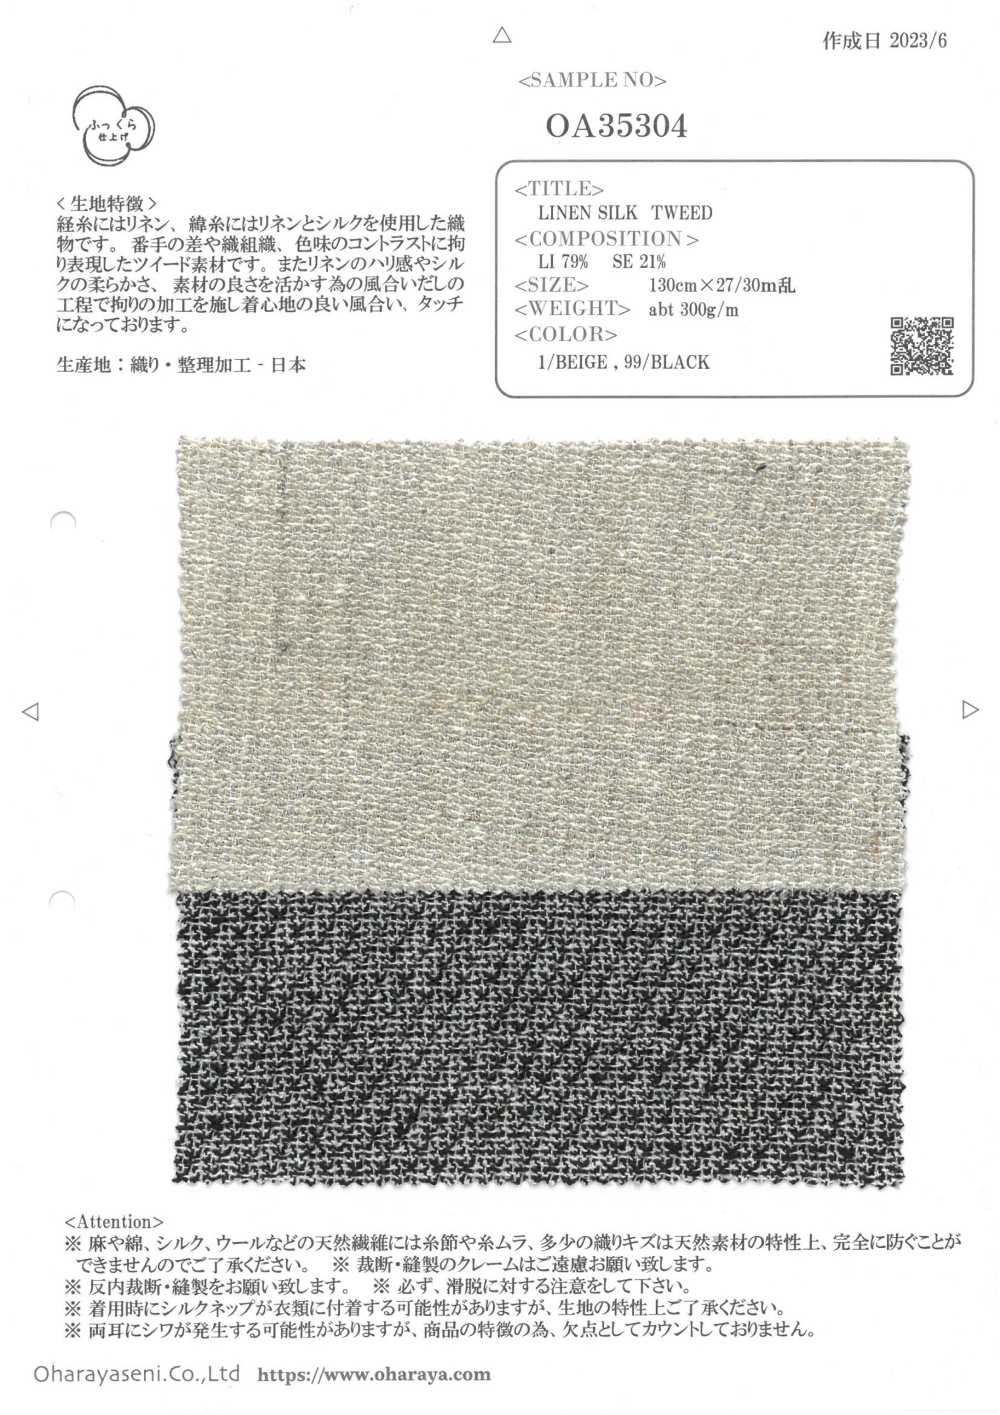 OA35304 TWEED LIN SOIE[Fabrication De Textile] Oharayaseni